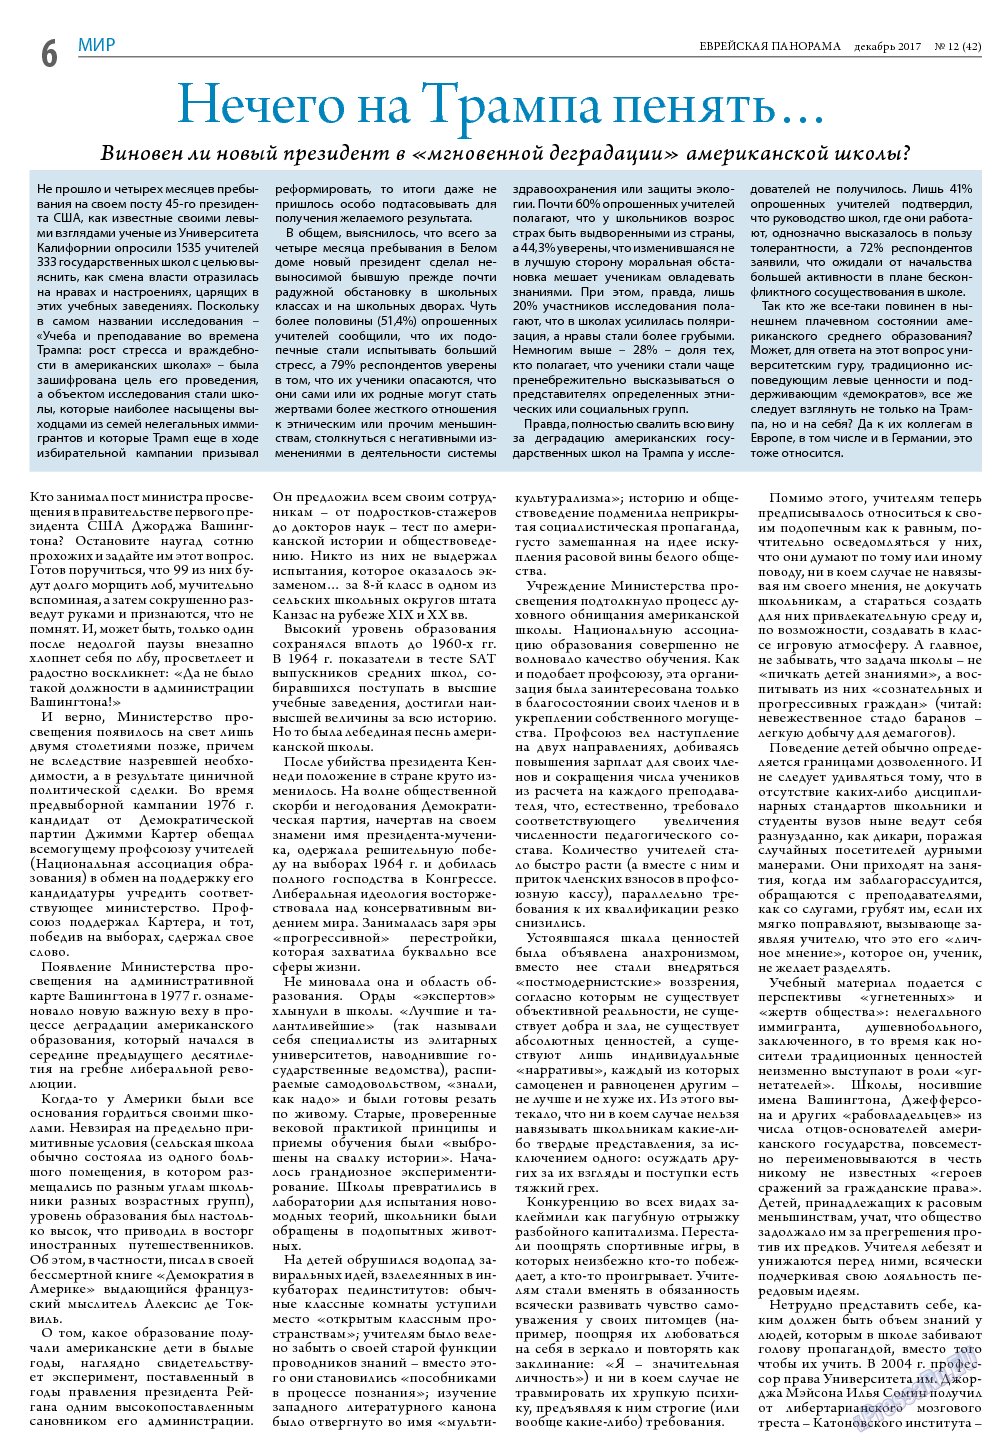 Еврейская панорама, газета. 2017 №12 стр.6